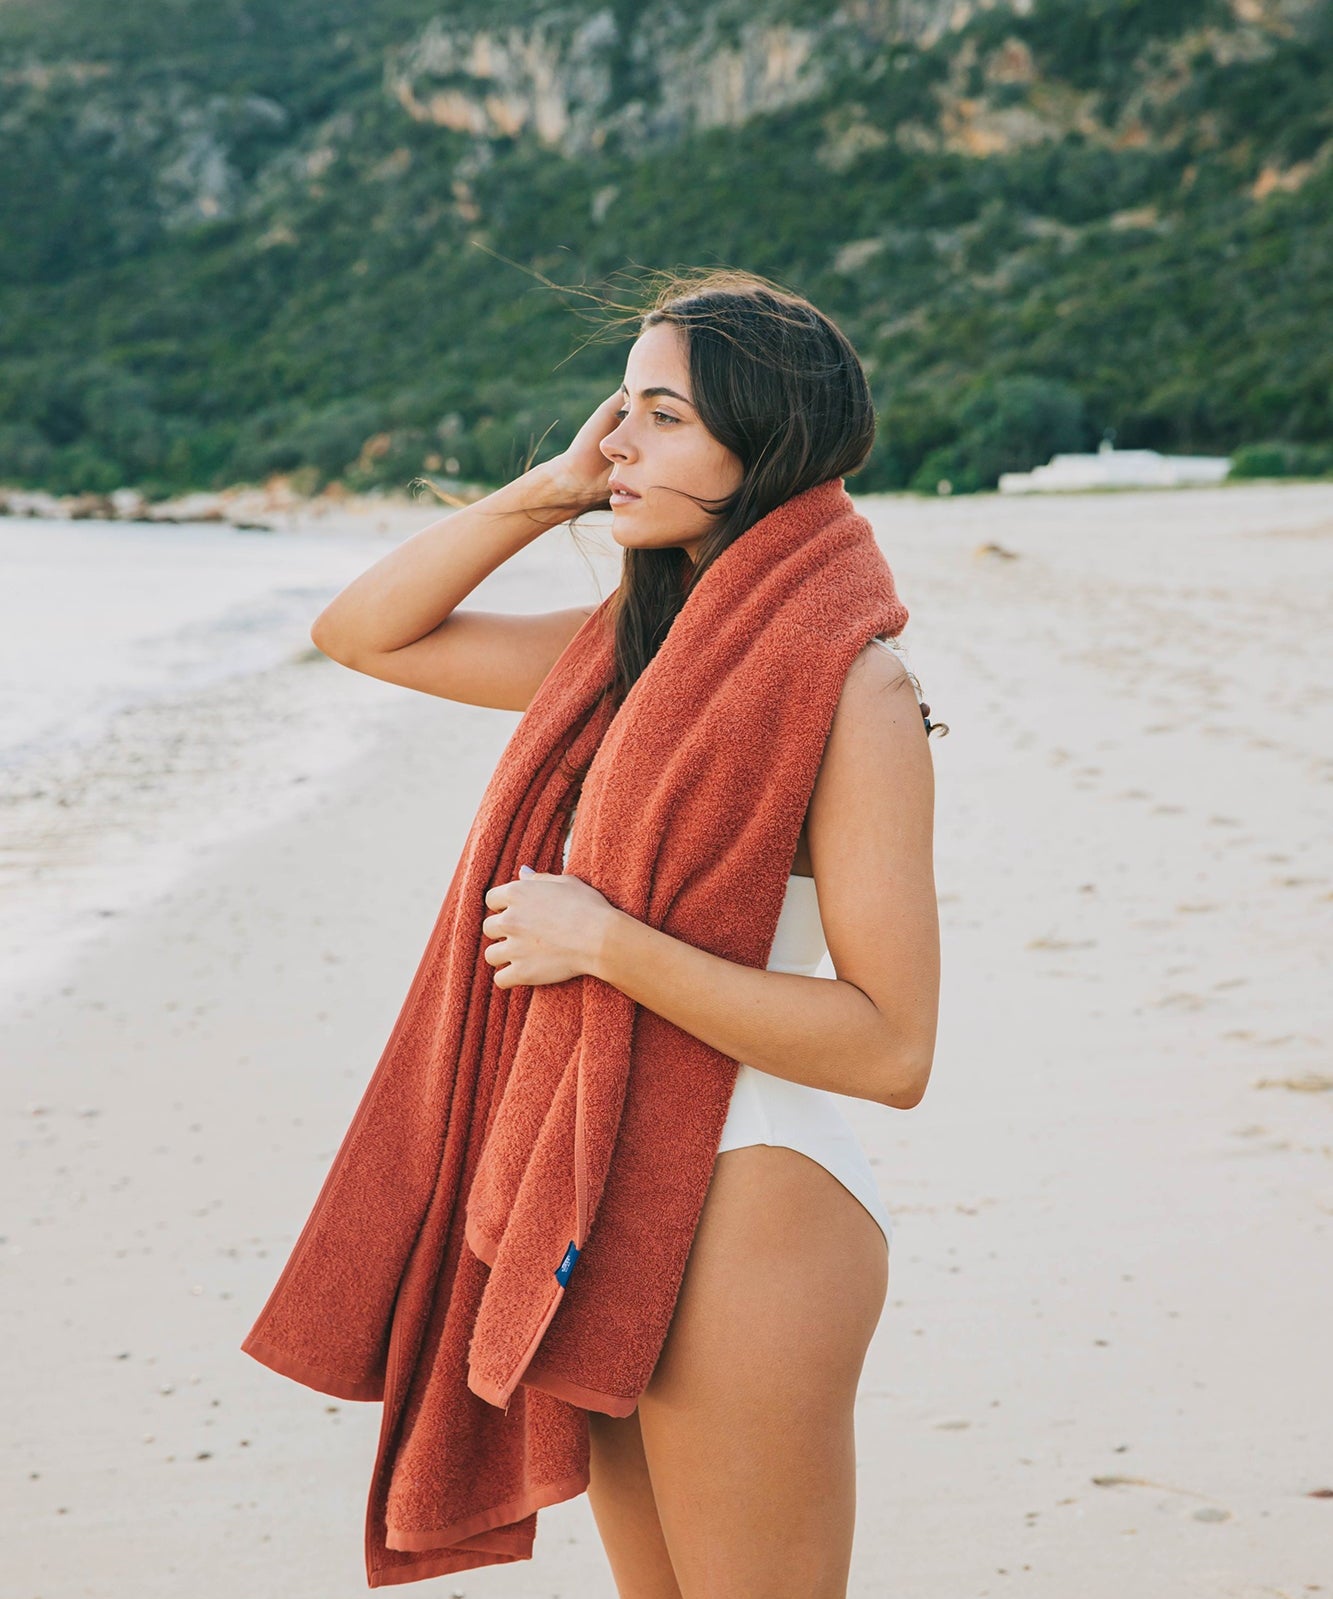 Terracotta Mar Tranquilo beach towel - Torres Novas